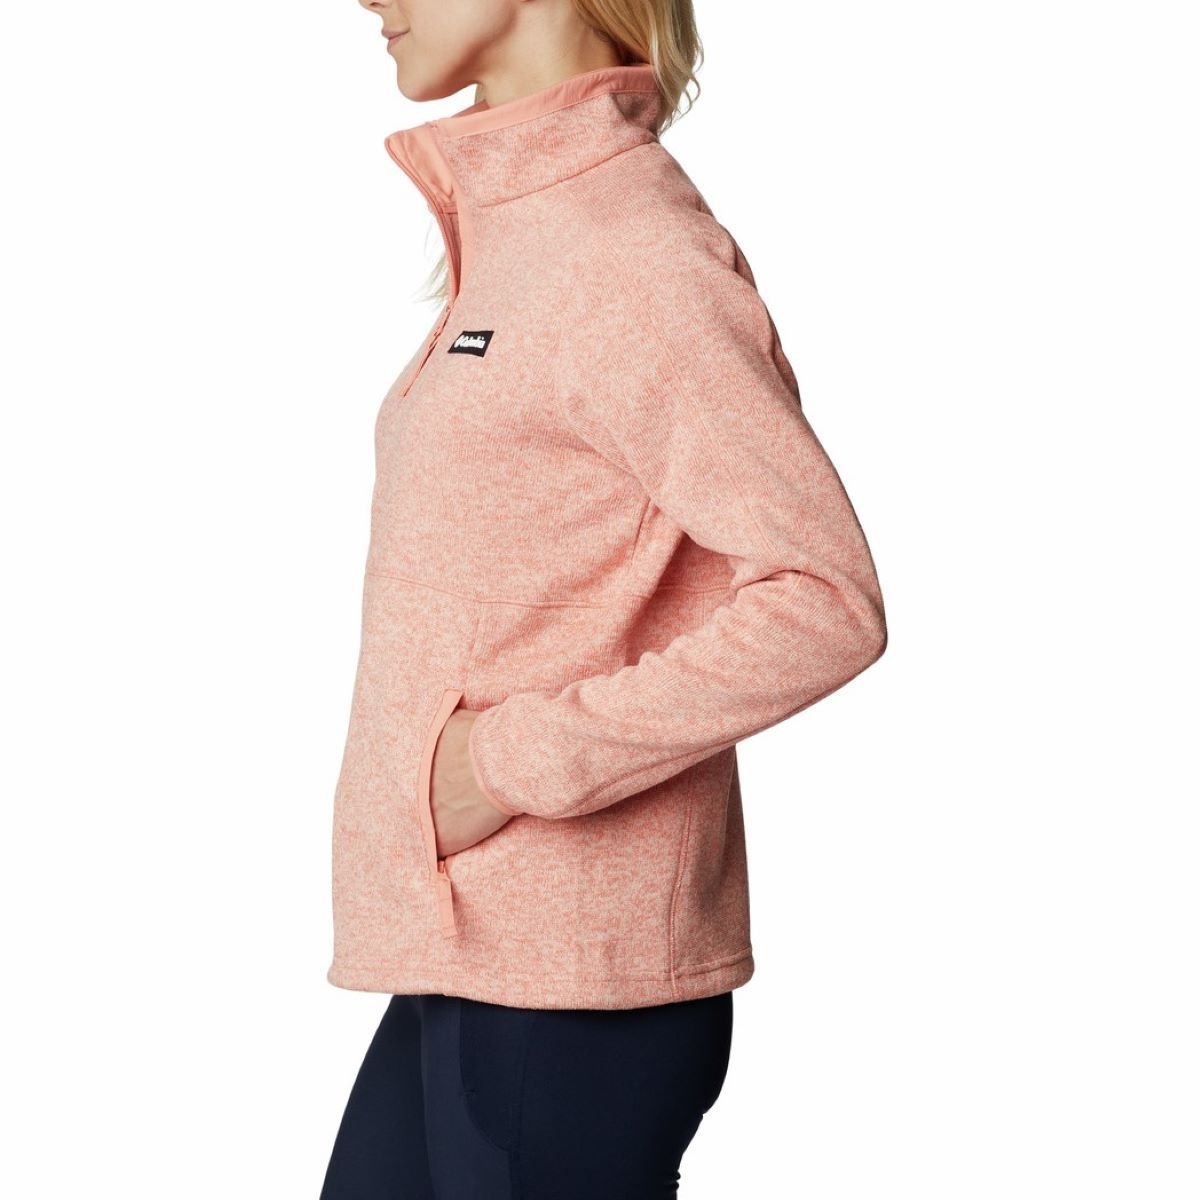 Mikina Columbia Sweater Weather™ Full Zip W - oranžová